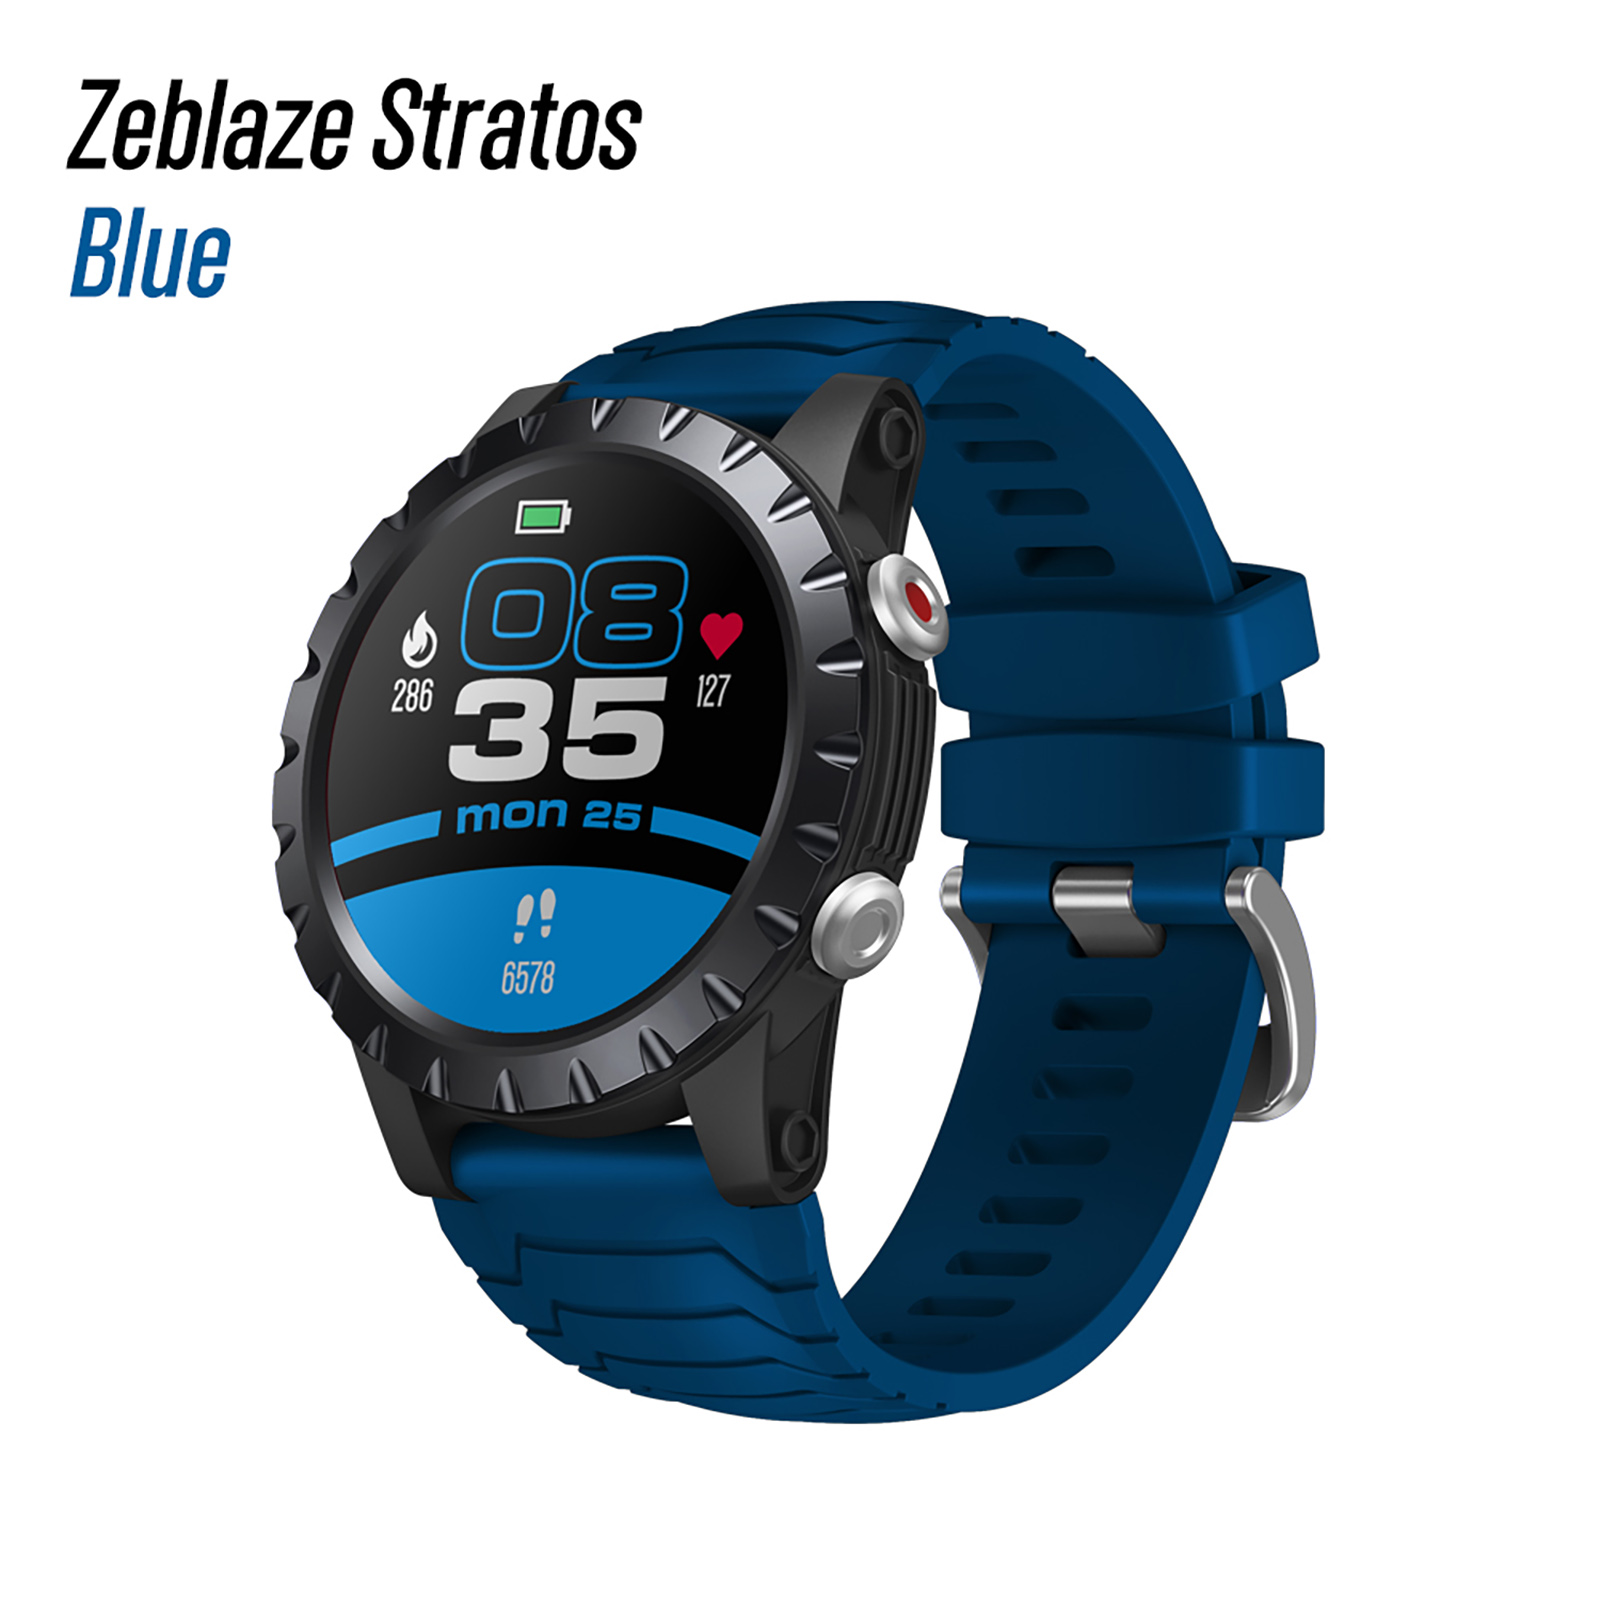 Original ZEBLAZE Stratos Smartwatch Gps Sports Tracking SpO2 Blood Oxygen Blood Pressure Heart Rate VO2 Max Monitoring Touch-screen Smart Watch blue